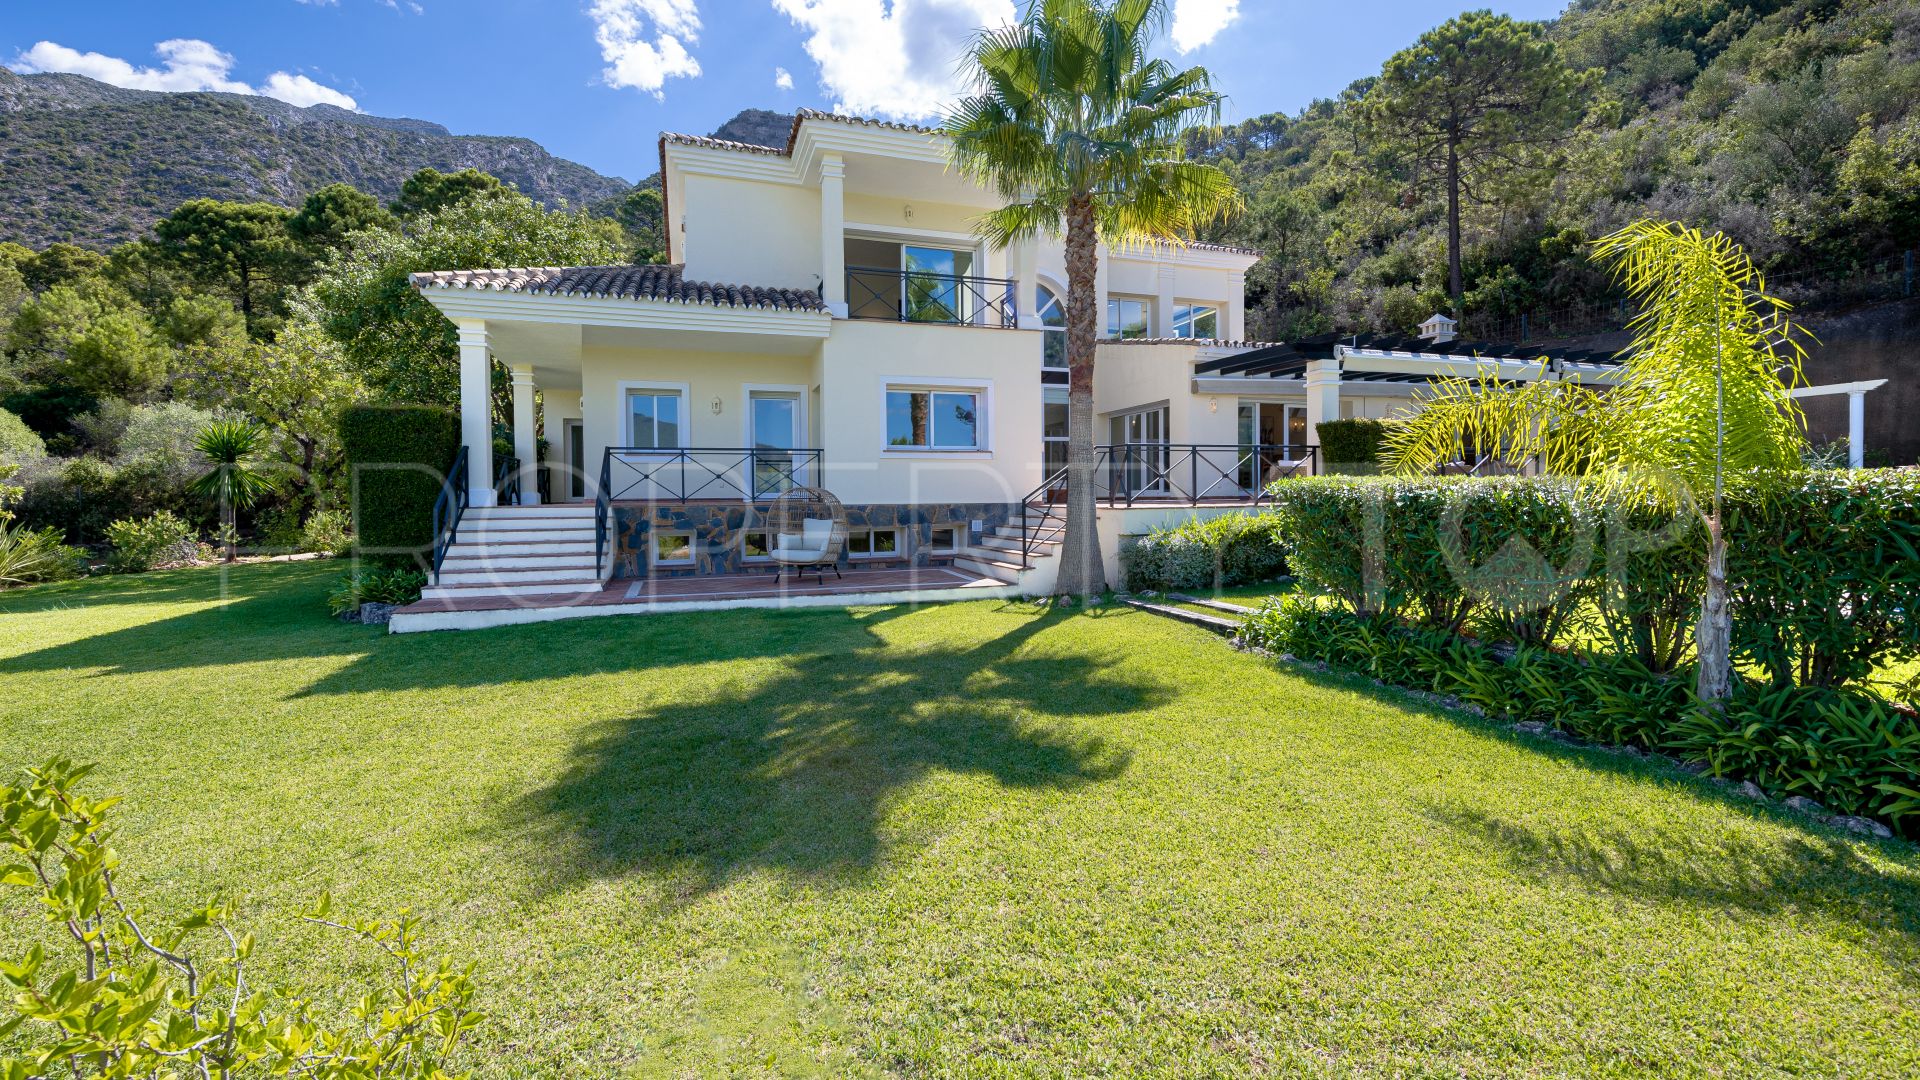 For sale villa with 5 bedrooms in Carretera de Istan